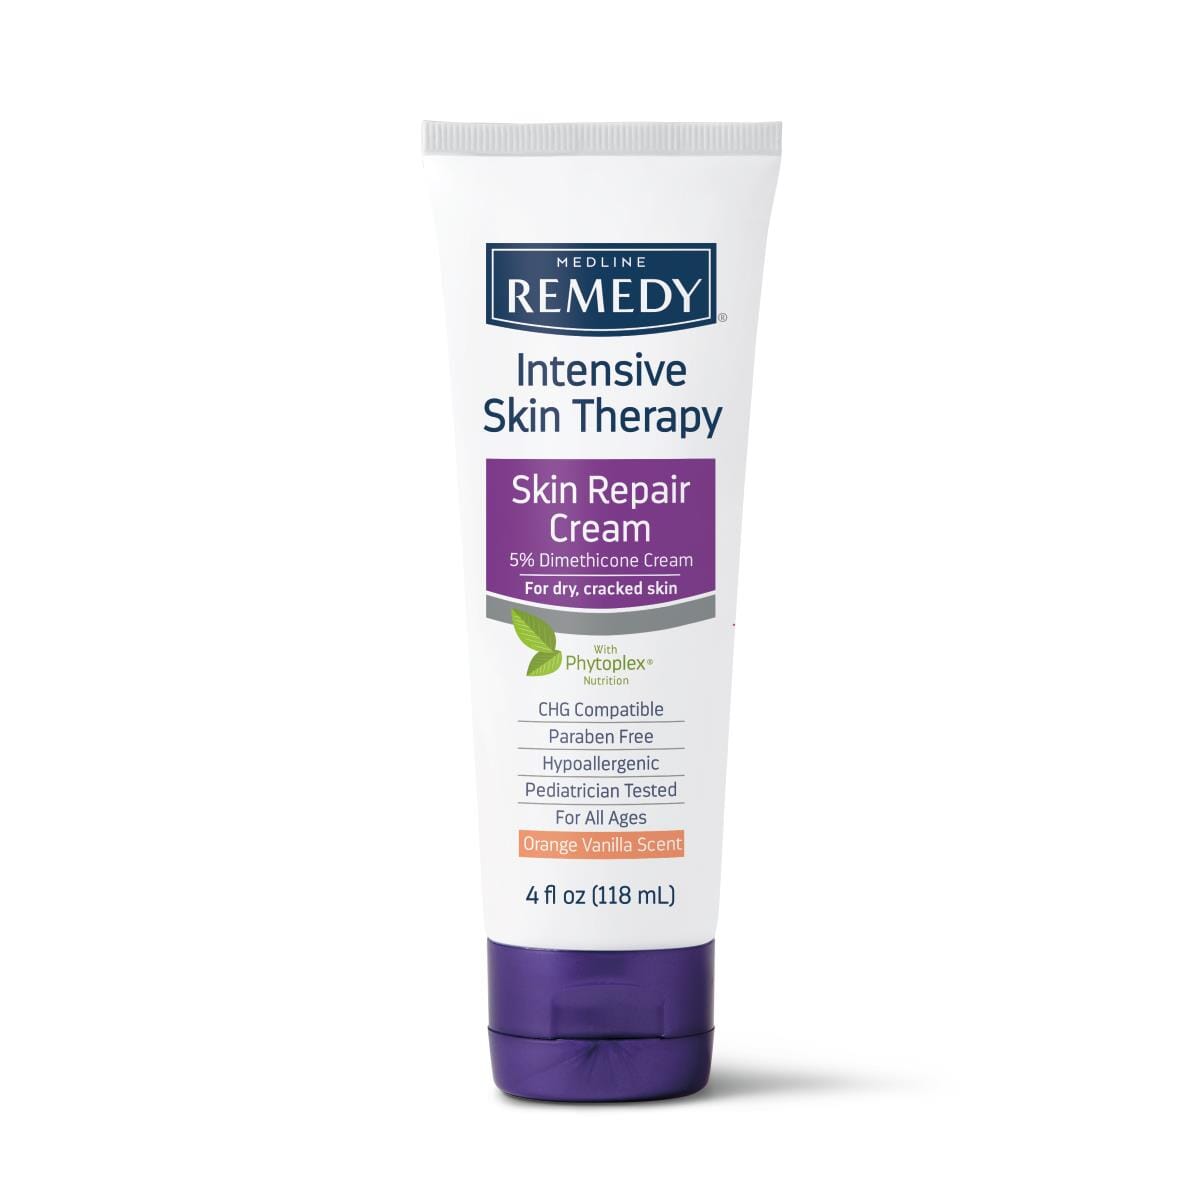 Image of Remedy Intensive Skin Therapy Skin Repair Cream